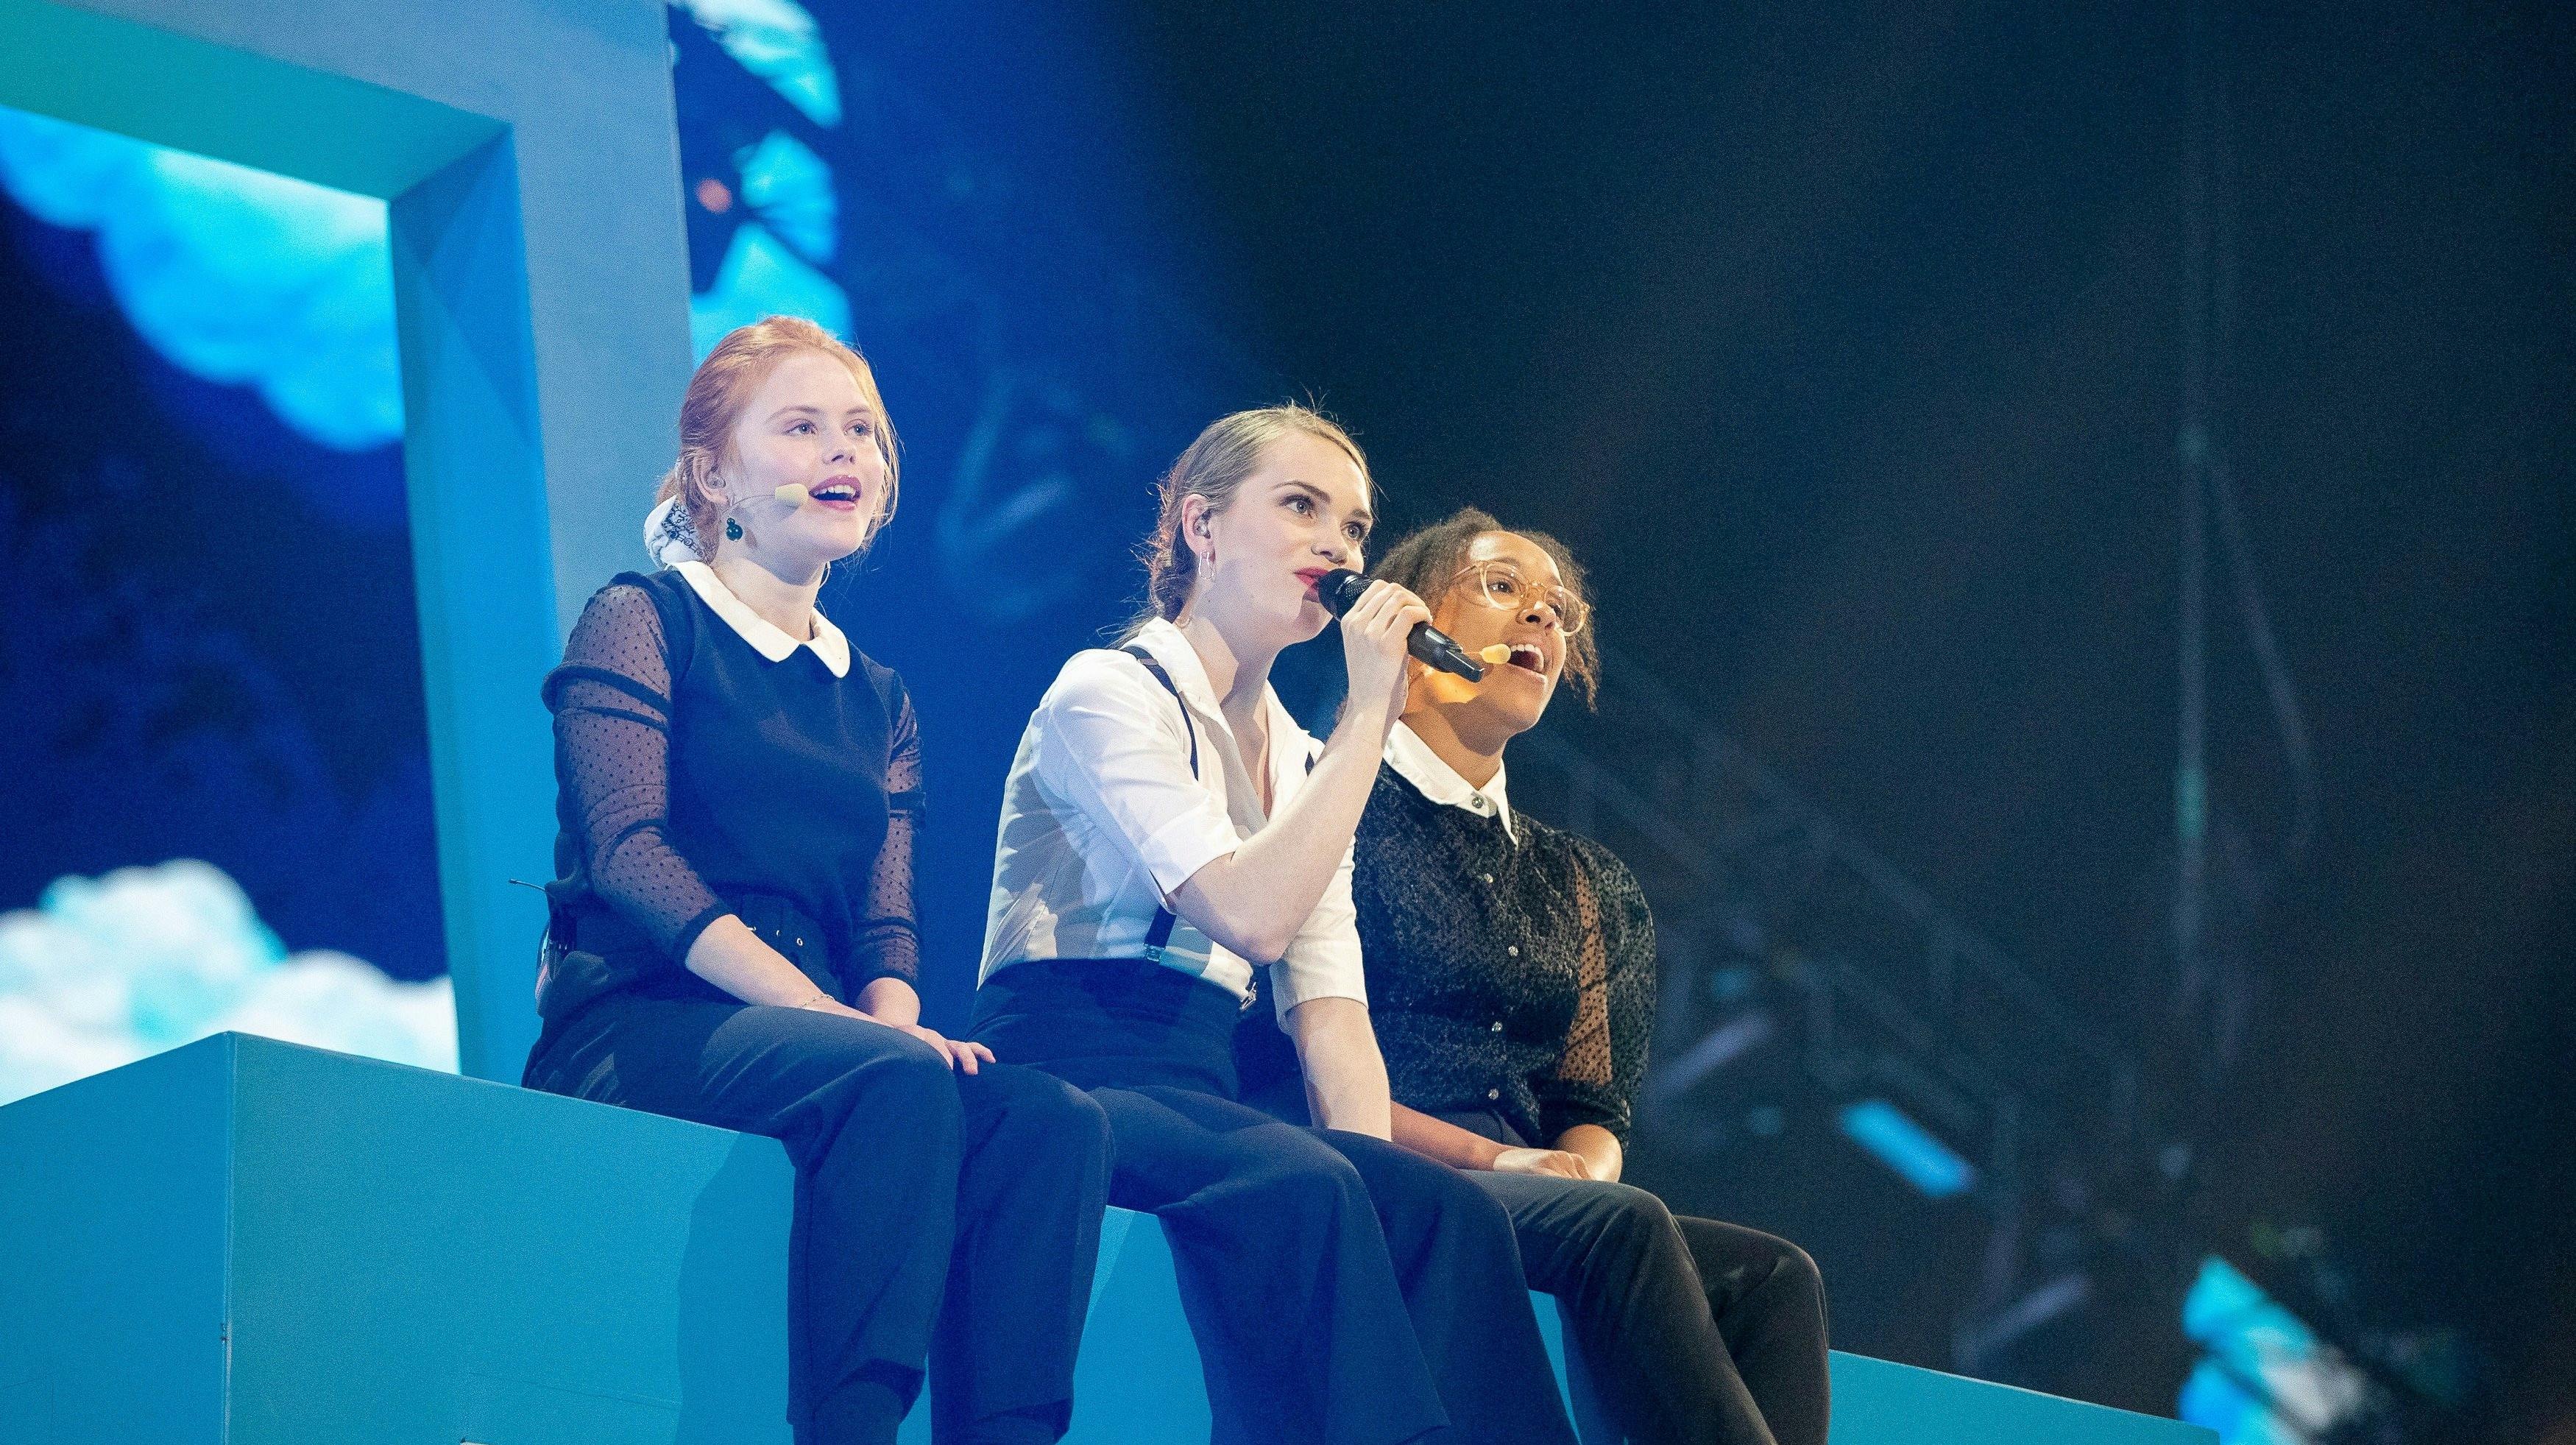 Leonora med sine to korpiger under en prøve ved Eurovision Song Contest 2019: Andrea Heick Gadeberg og Sofie Niebuhr McQueen.&nbsp;